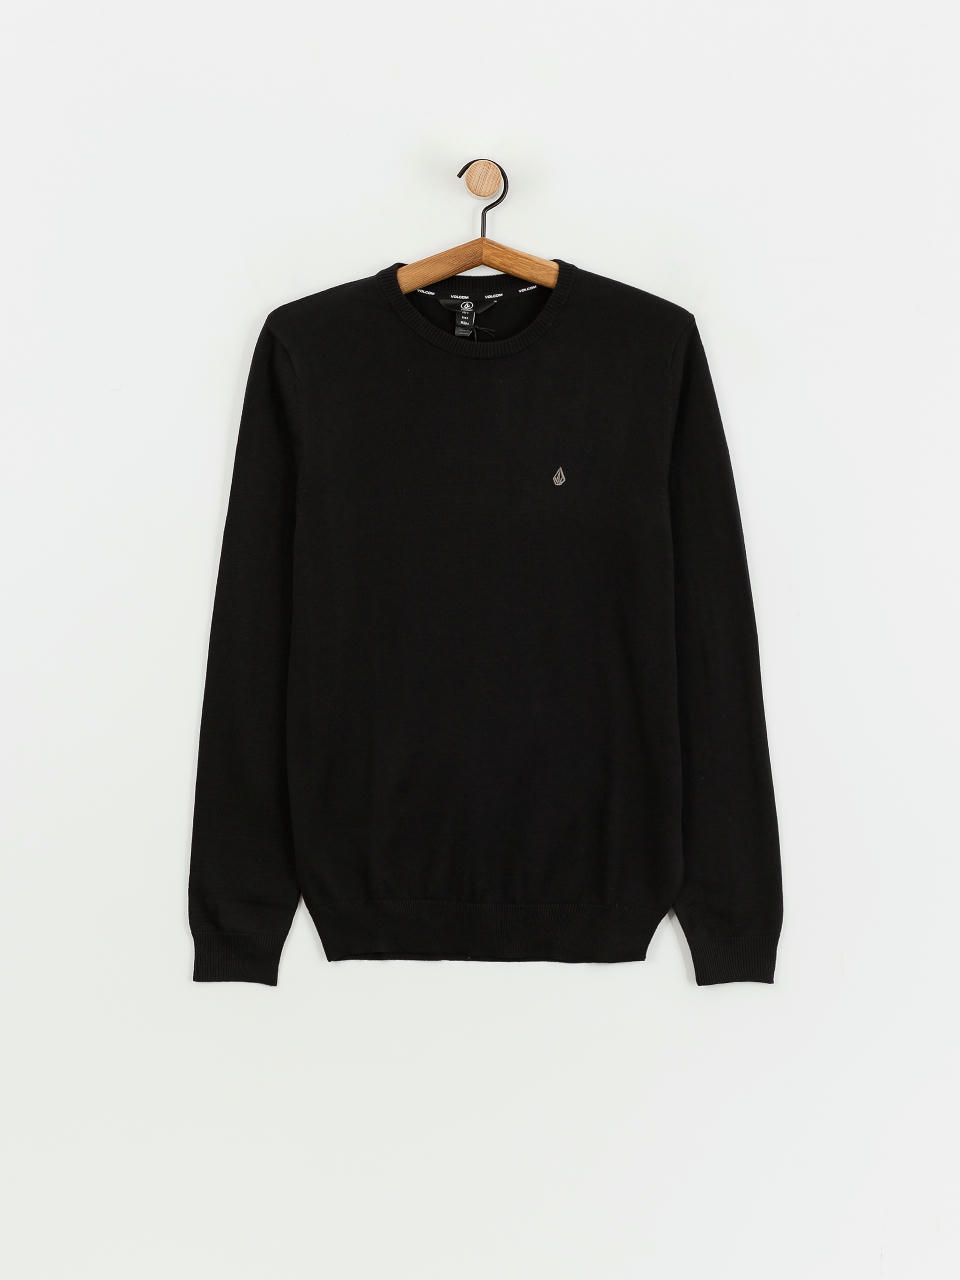 Volcom Uperstand Sweater (black)